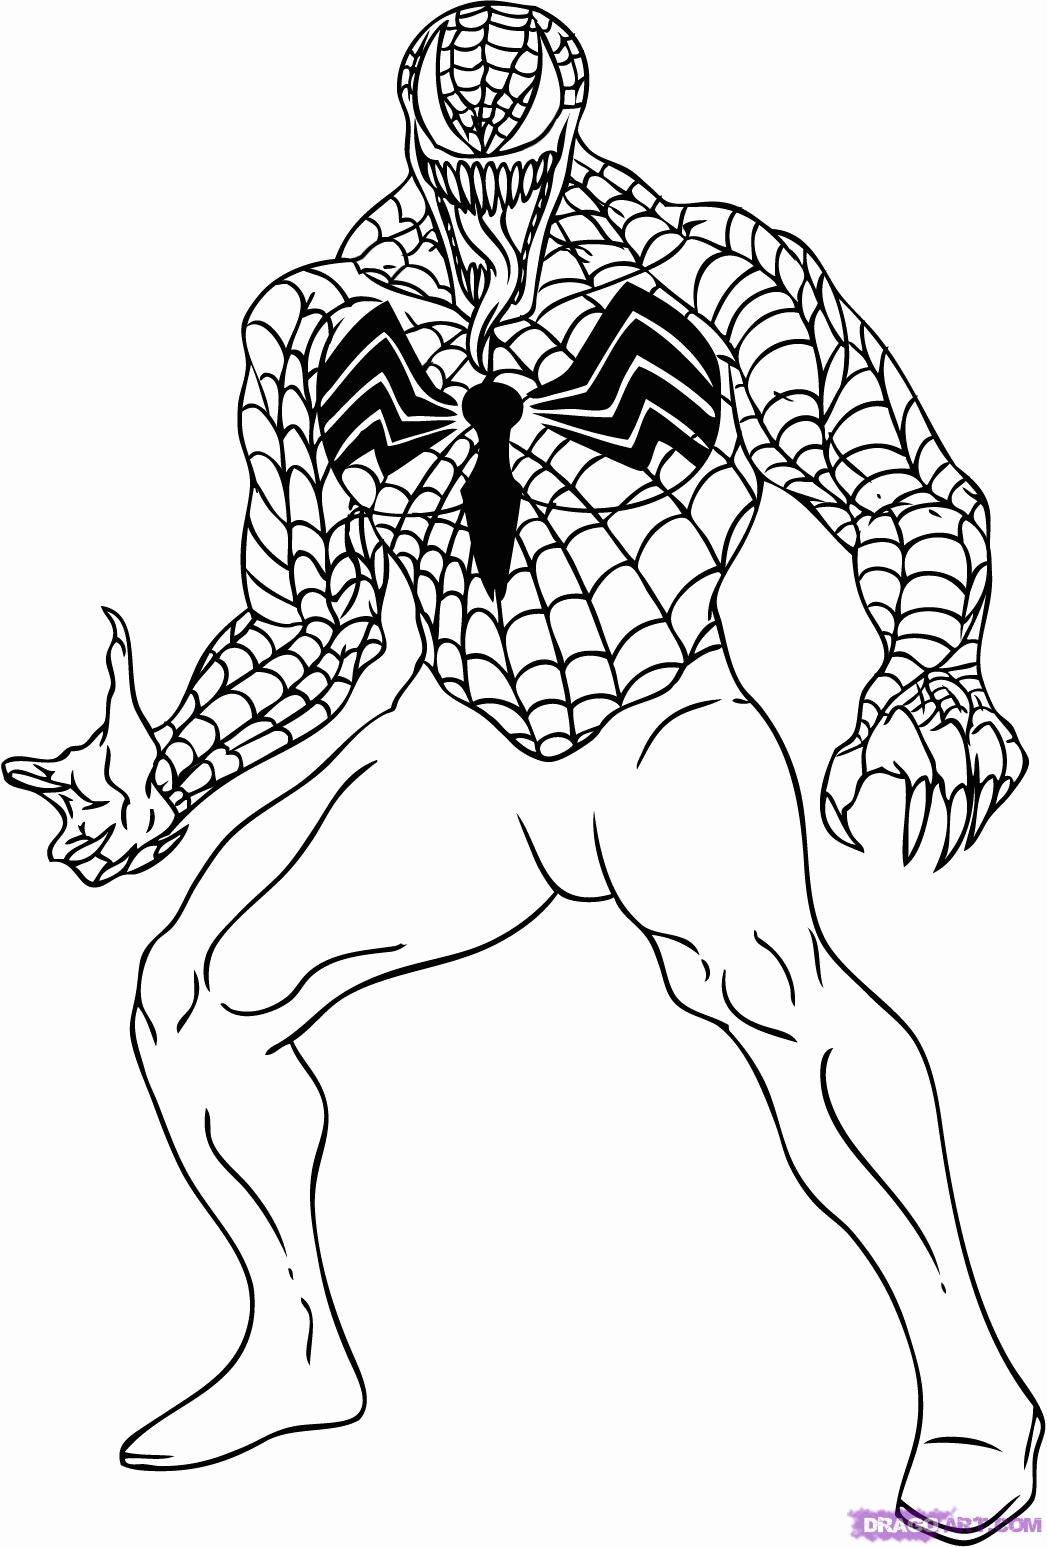 Dibujo de Venom 05 para colorear